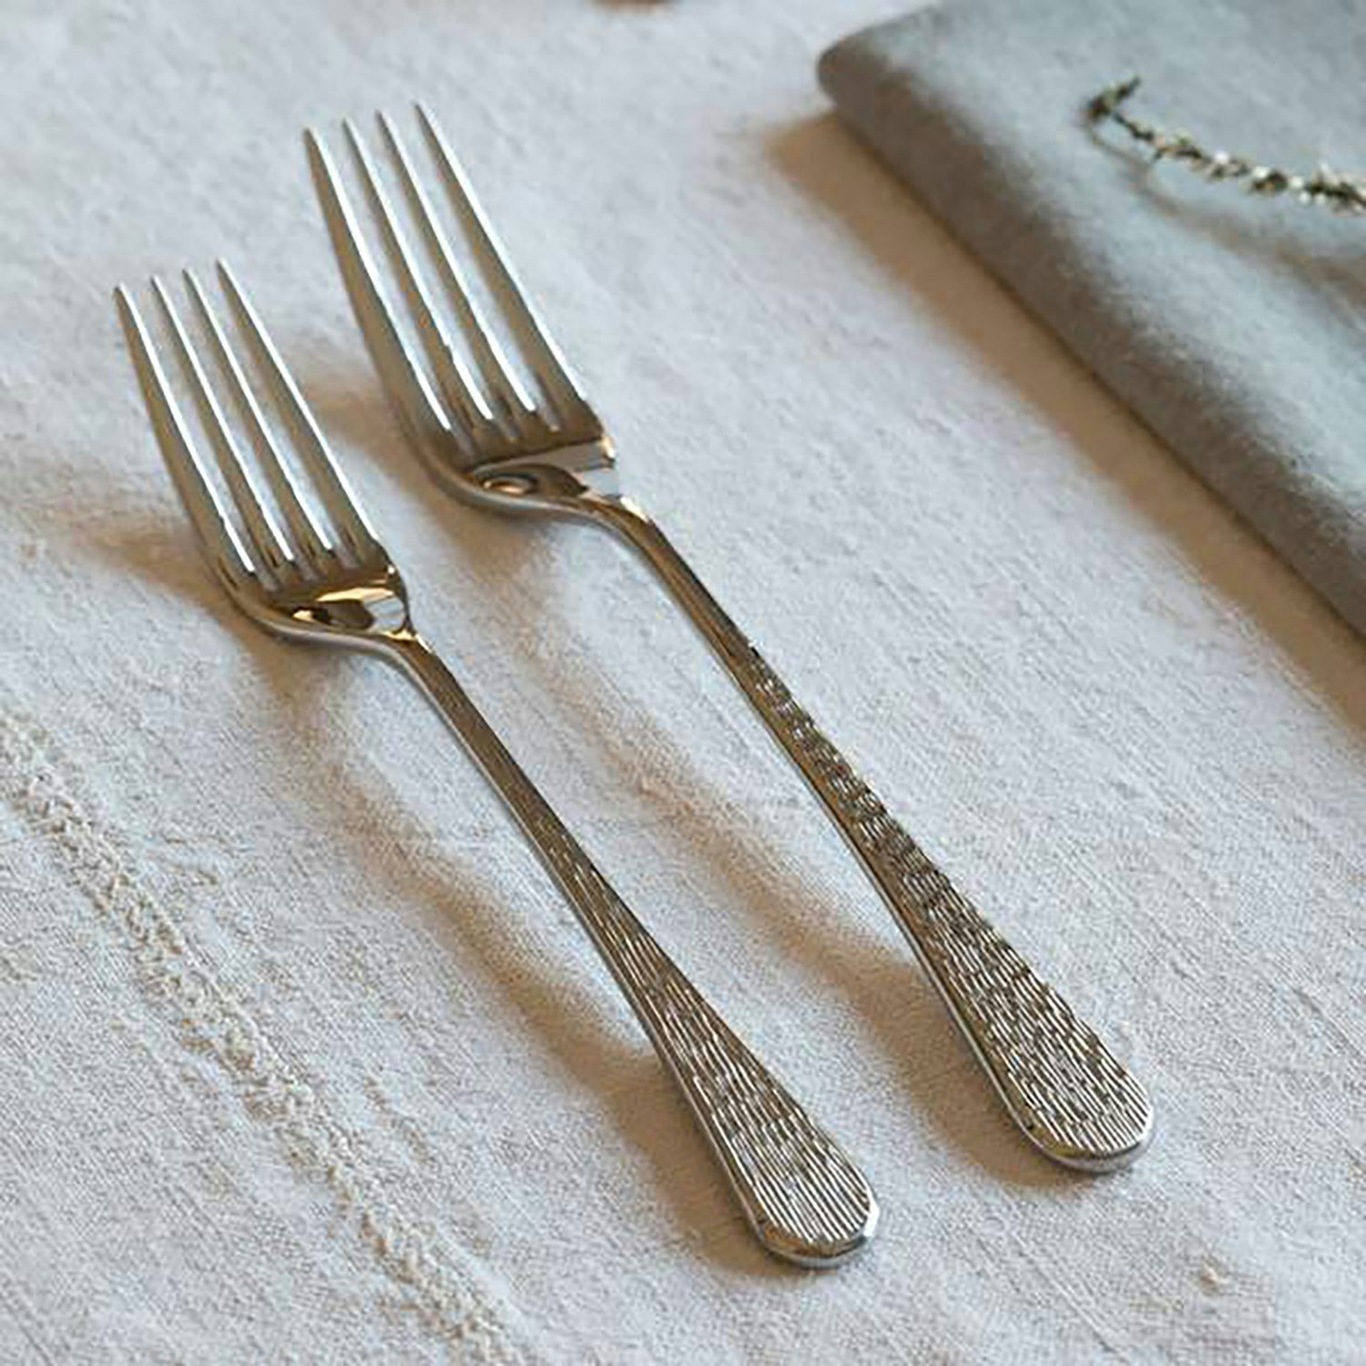 https://royaldesign.com/image/2/robert-welch-skye-dessert-fork-185-cm-1?w=800&quality=80